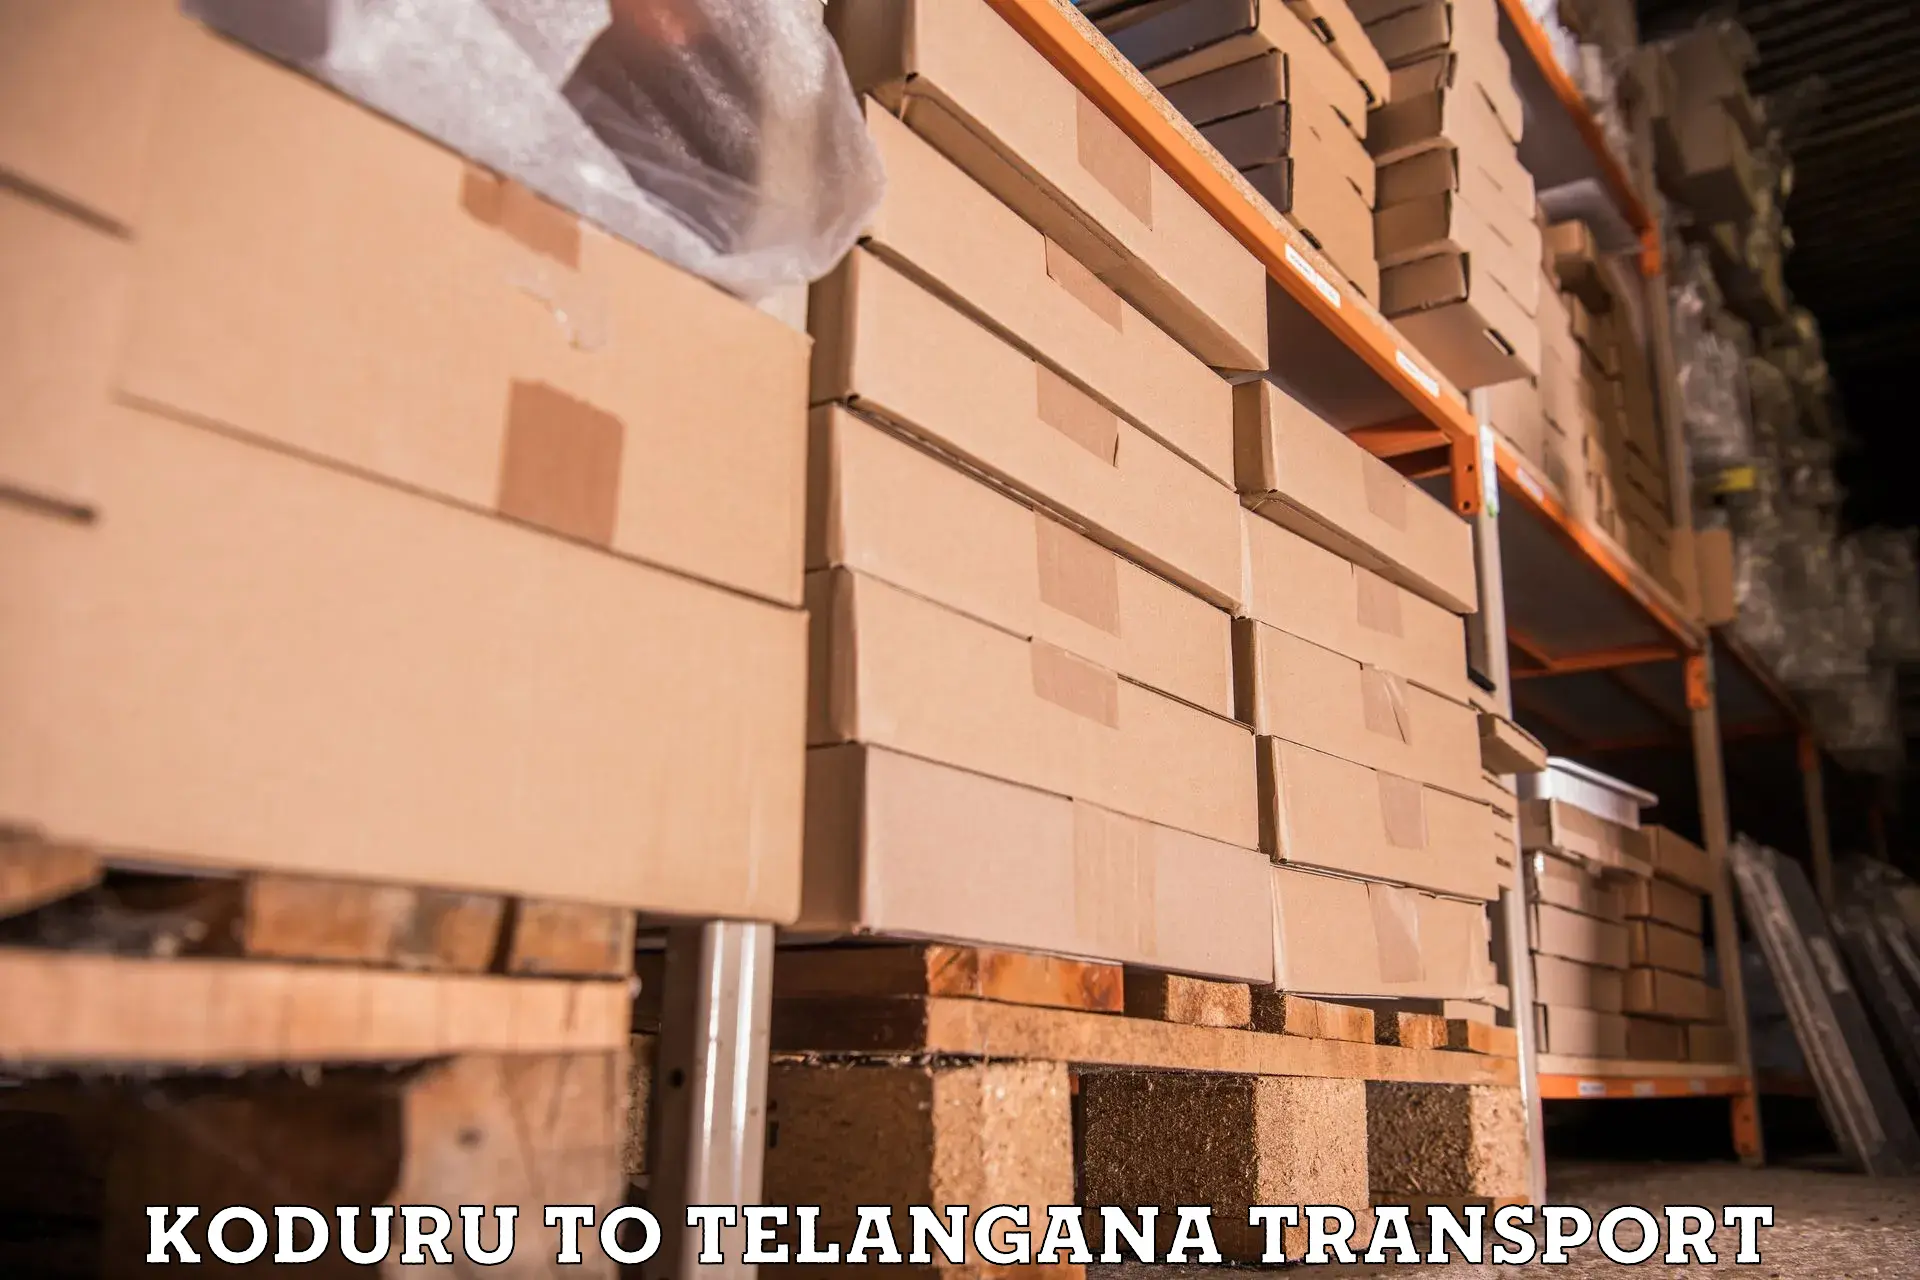 Daily parcel service transport in Koduru to Tallada